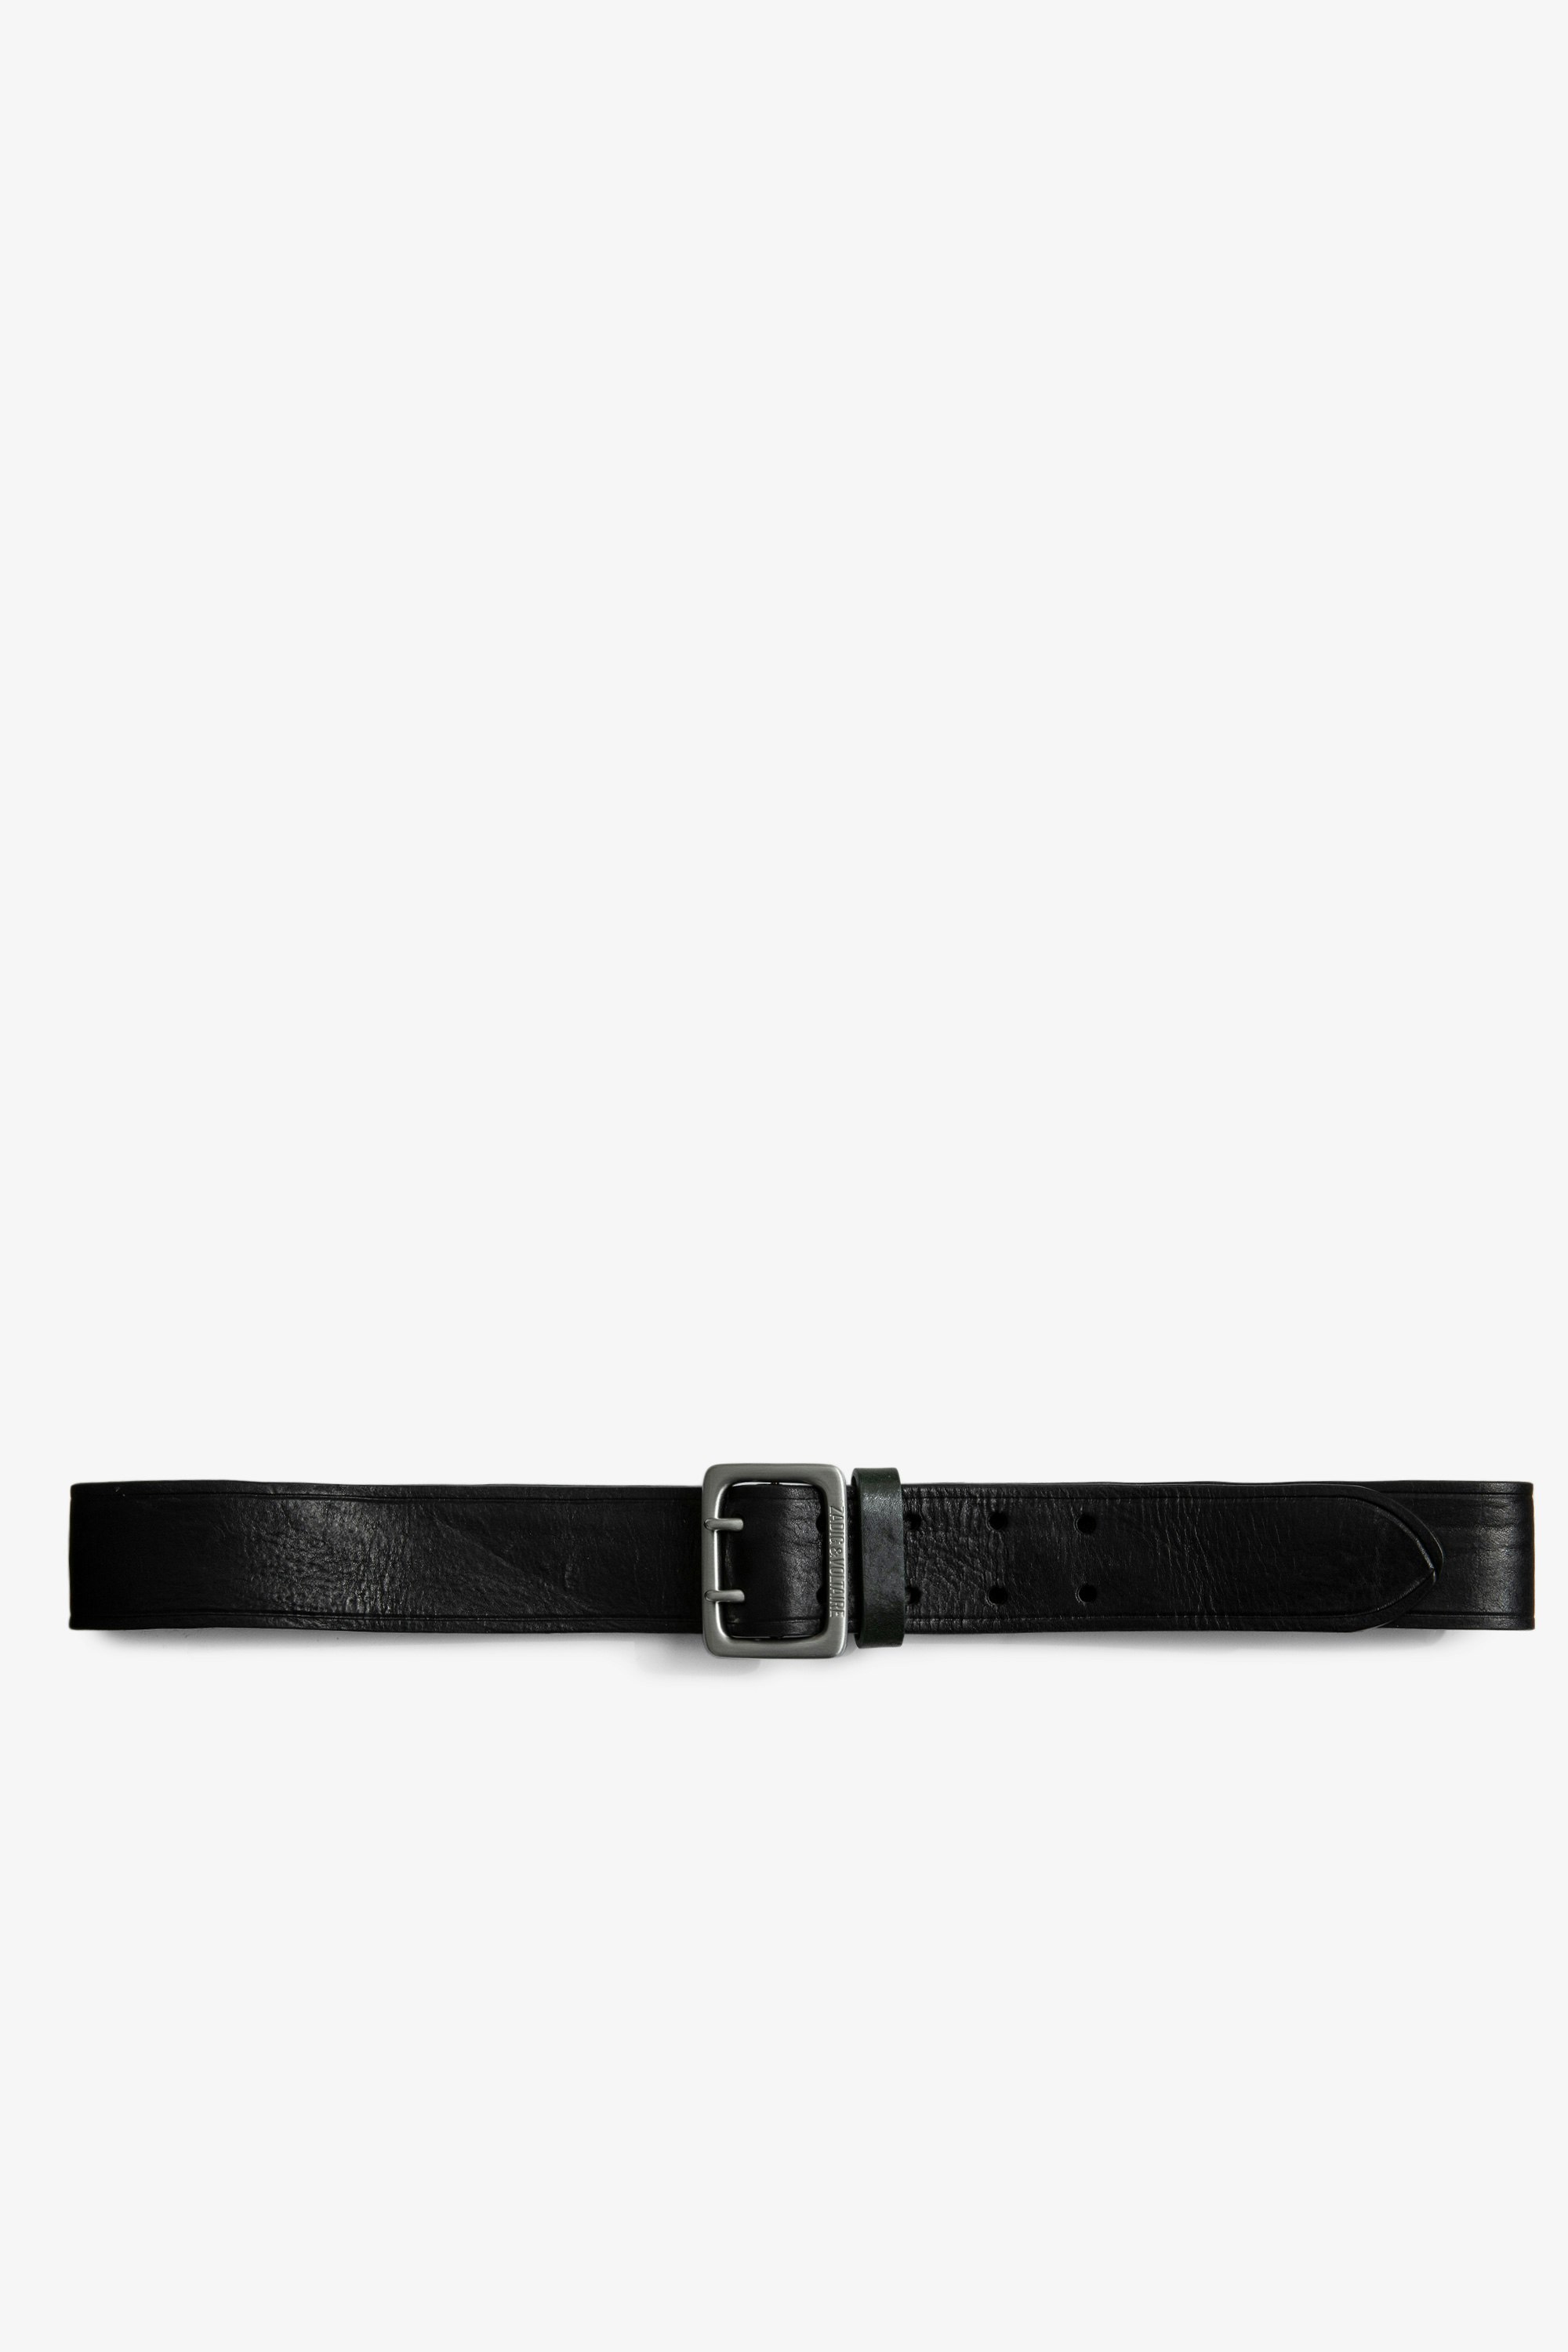 Buckley Belt - Men's black leather belt with silver buckle